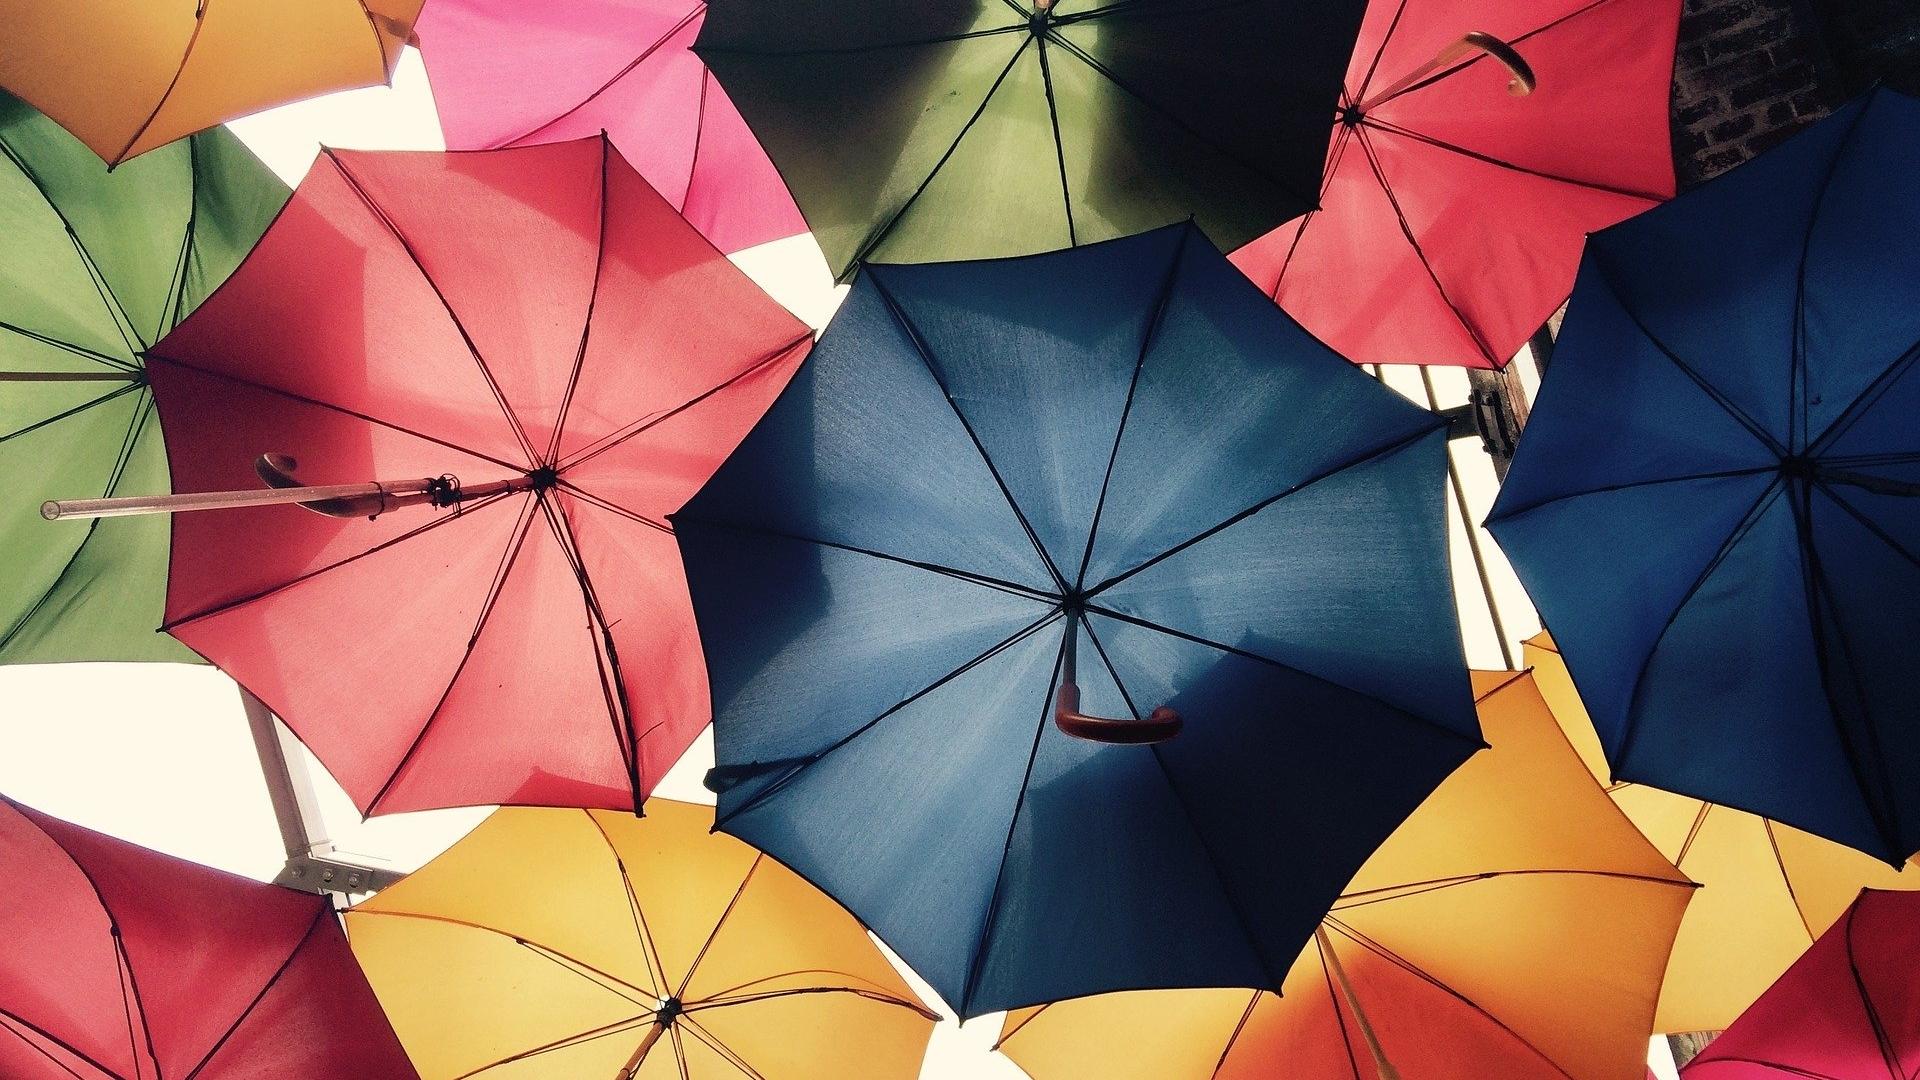 umbrellas-816338_1920_c._Jacs_Henderson_Pixabay